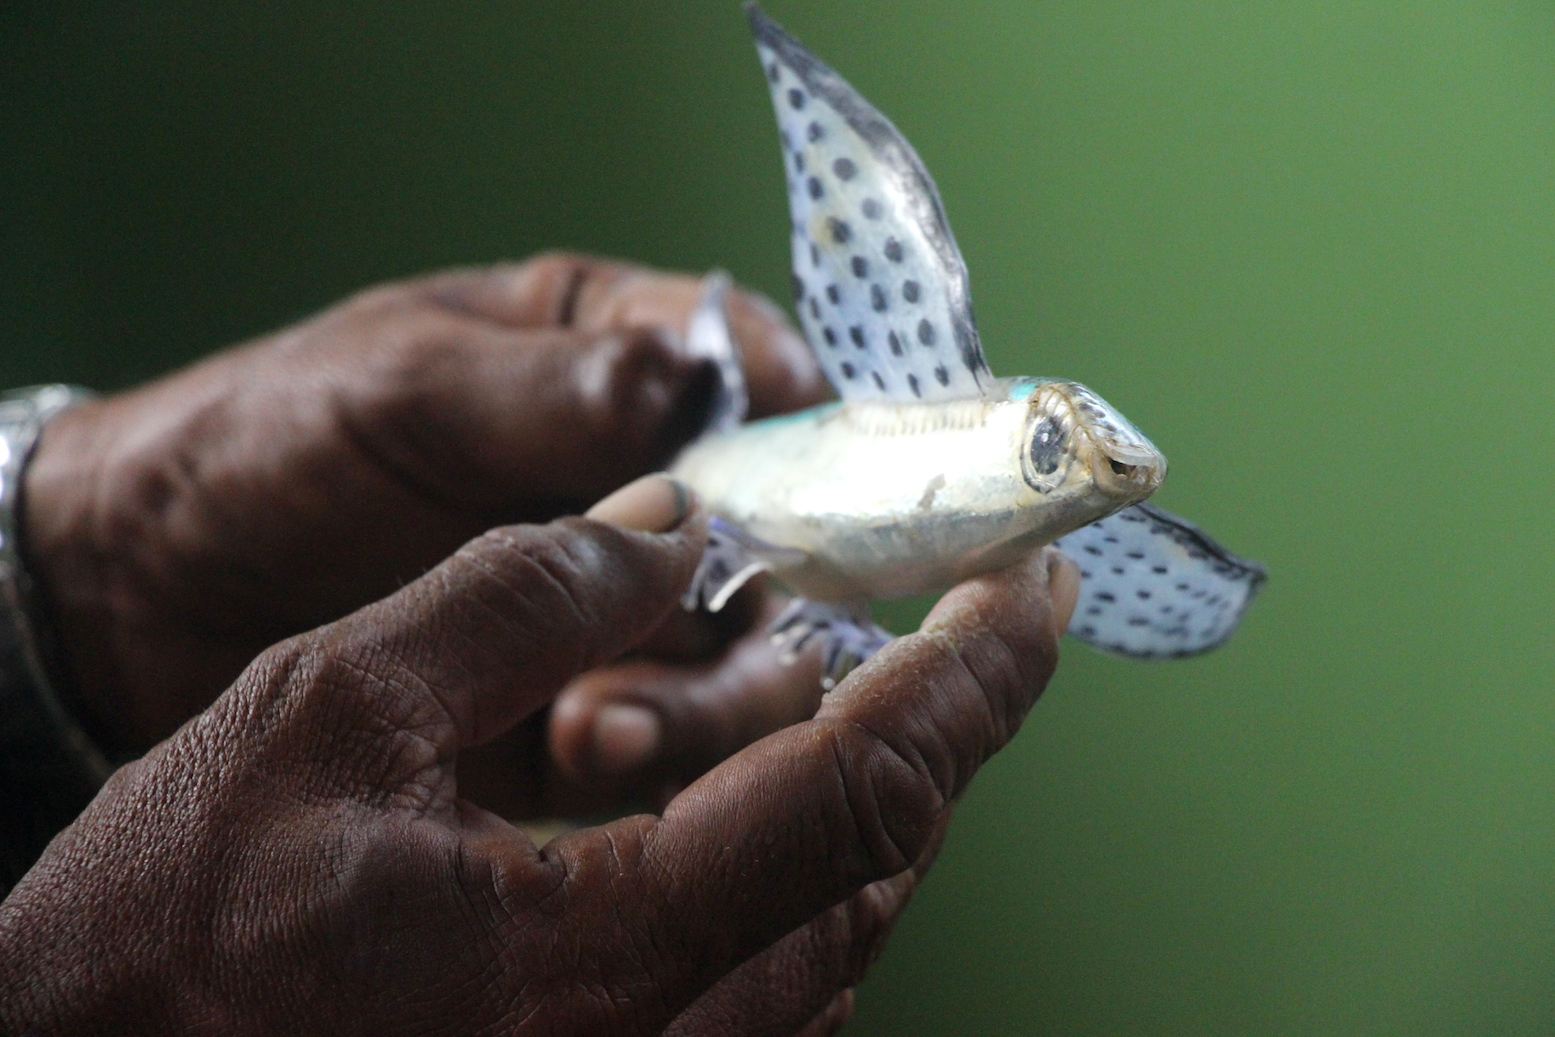 Salah satu umpan buatan nelayan untuk memancing ikan tuna. Umpan ini dibuat menyerupai ikan terbang. Foto: Melati Kaye